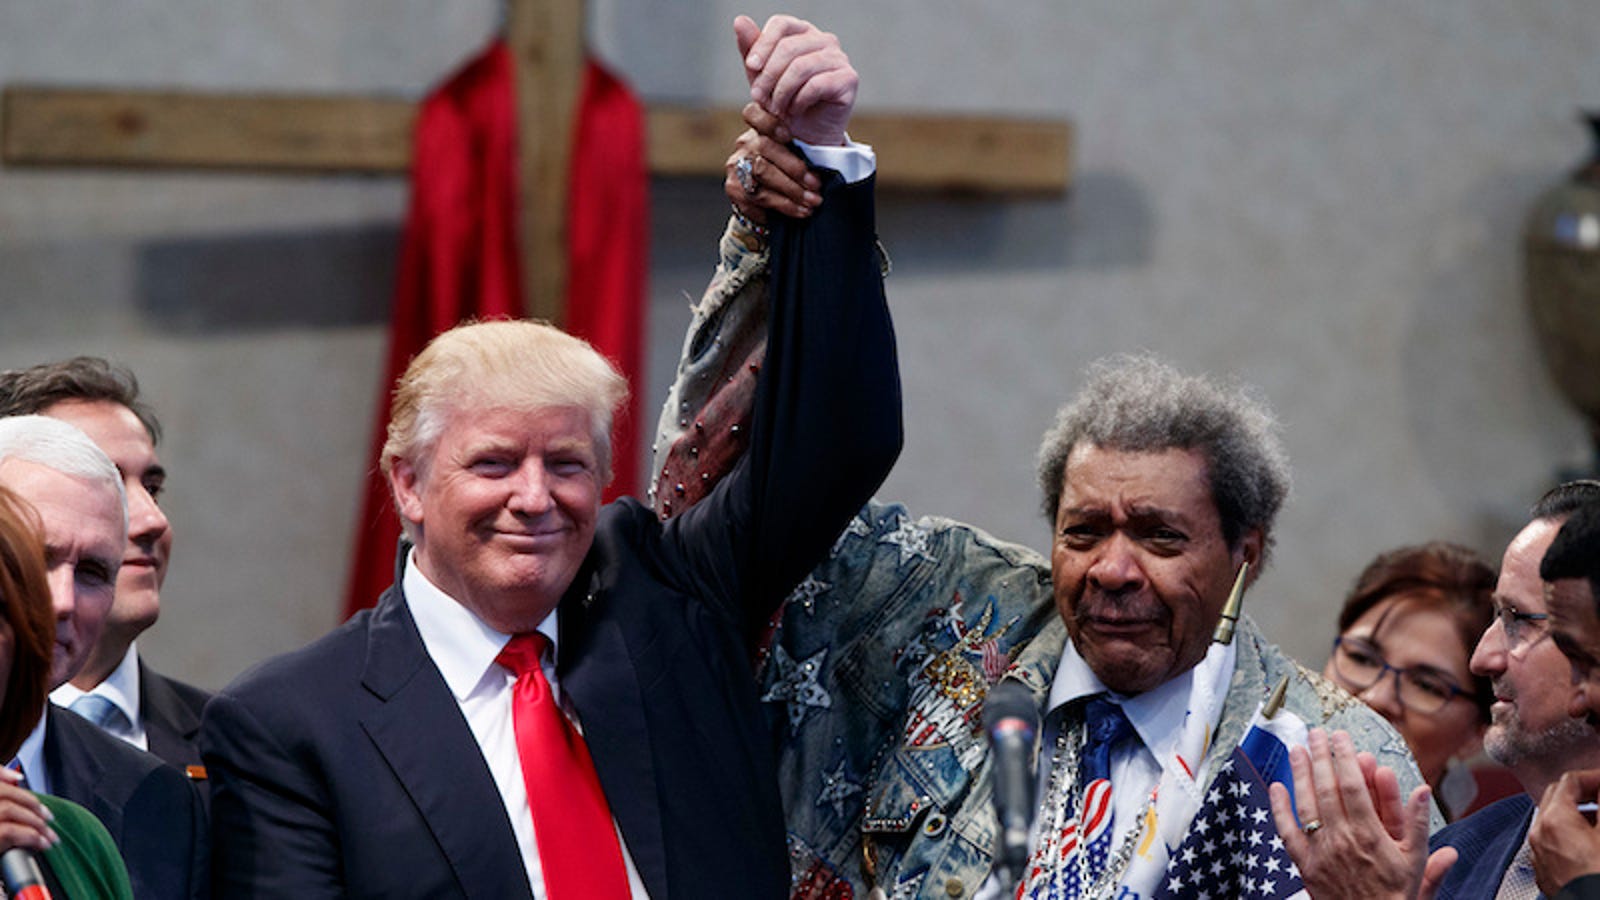 Don King Says Nigger While Introducing Donald Trump